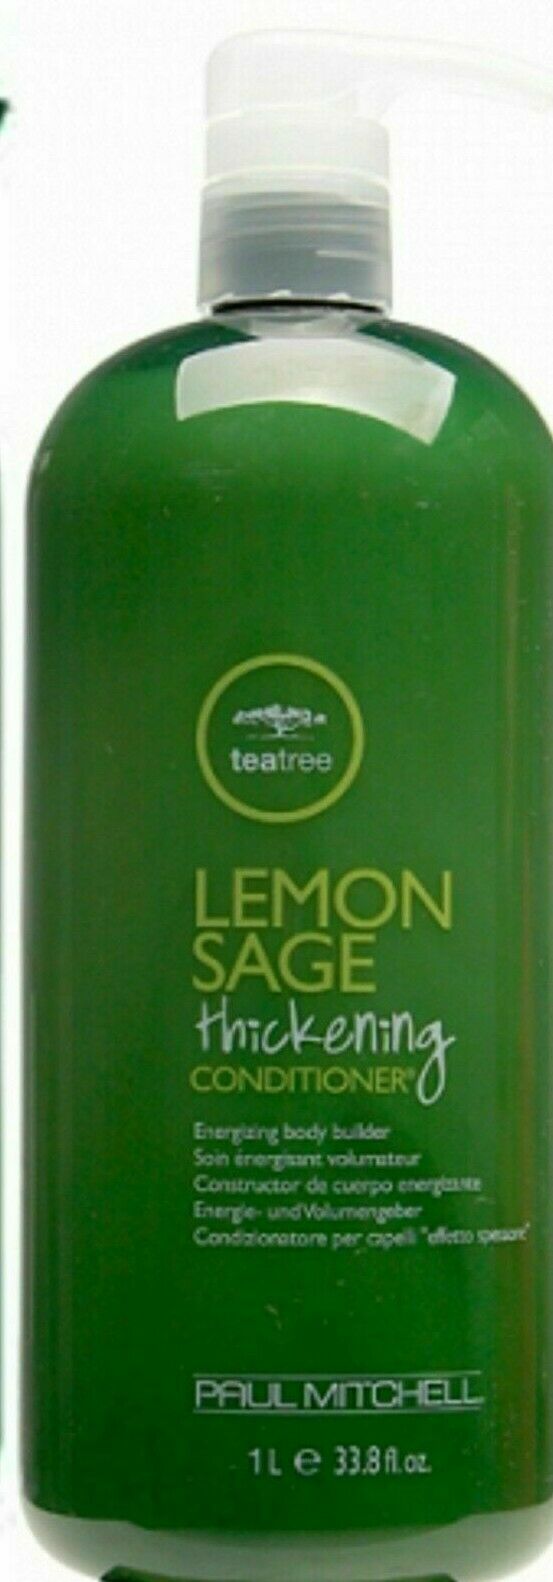 Paul Mitchell Tea Tree Lemon Sage Thickening Conditioner  1lt - Australian Salon Discounters